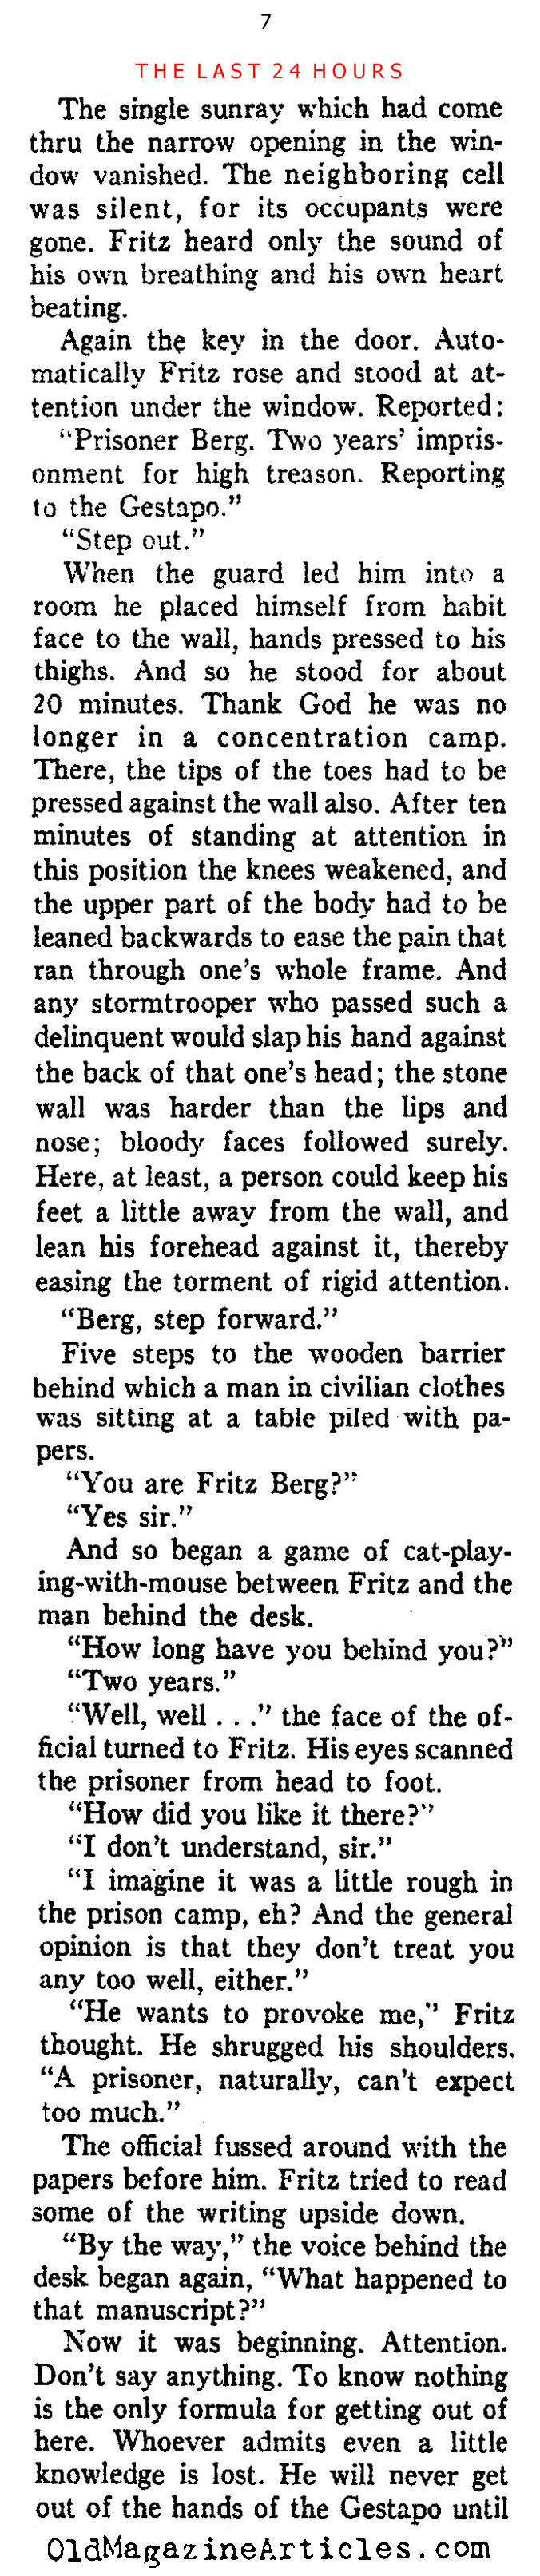 A German Dissident Recalls His Incarceration  (Ken Magazine, 1938)